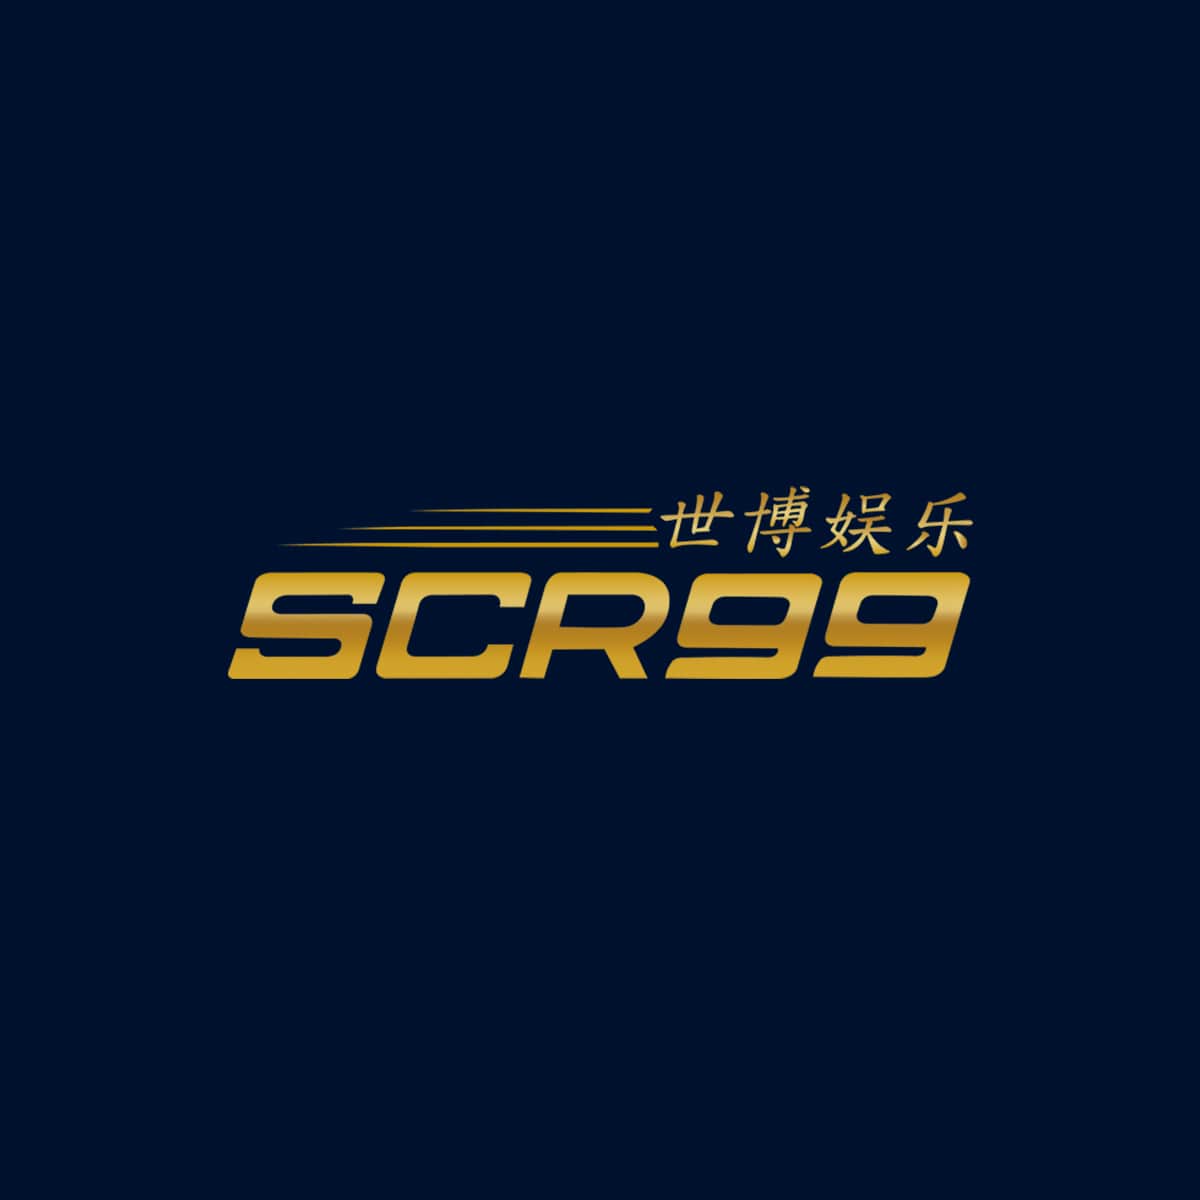 Online Casino SCR99 Logo